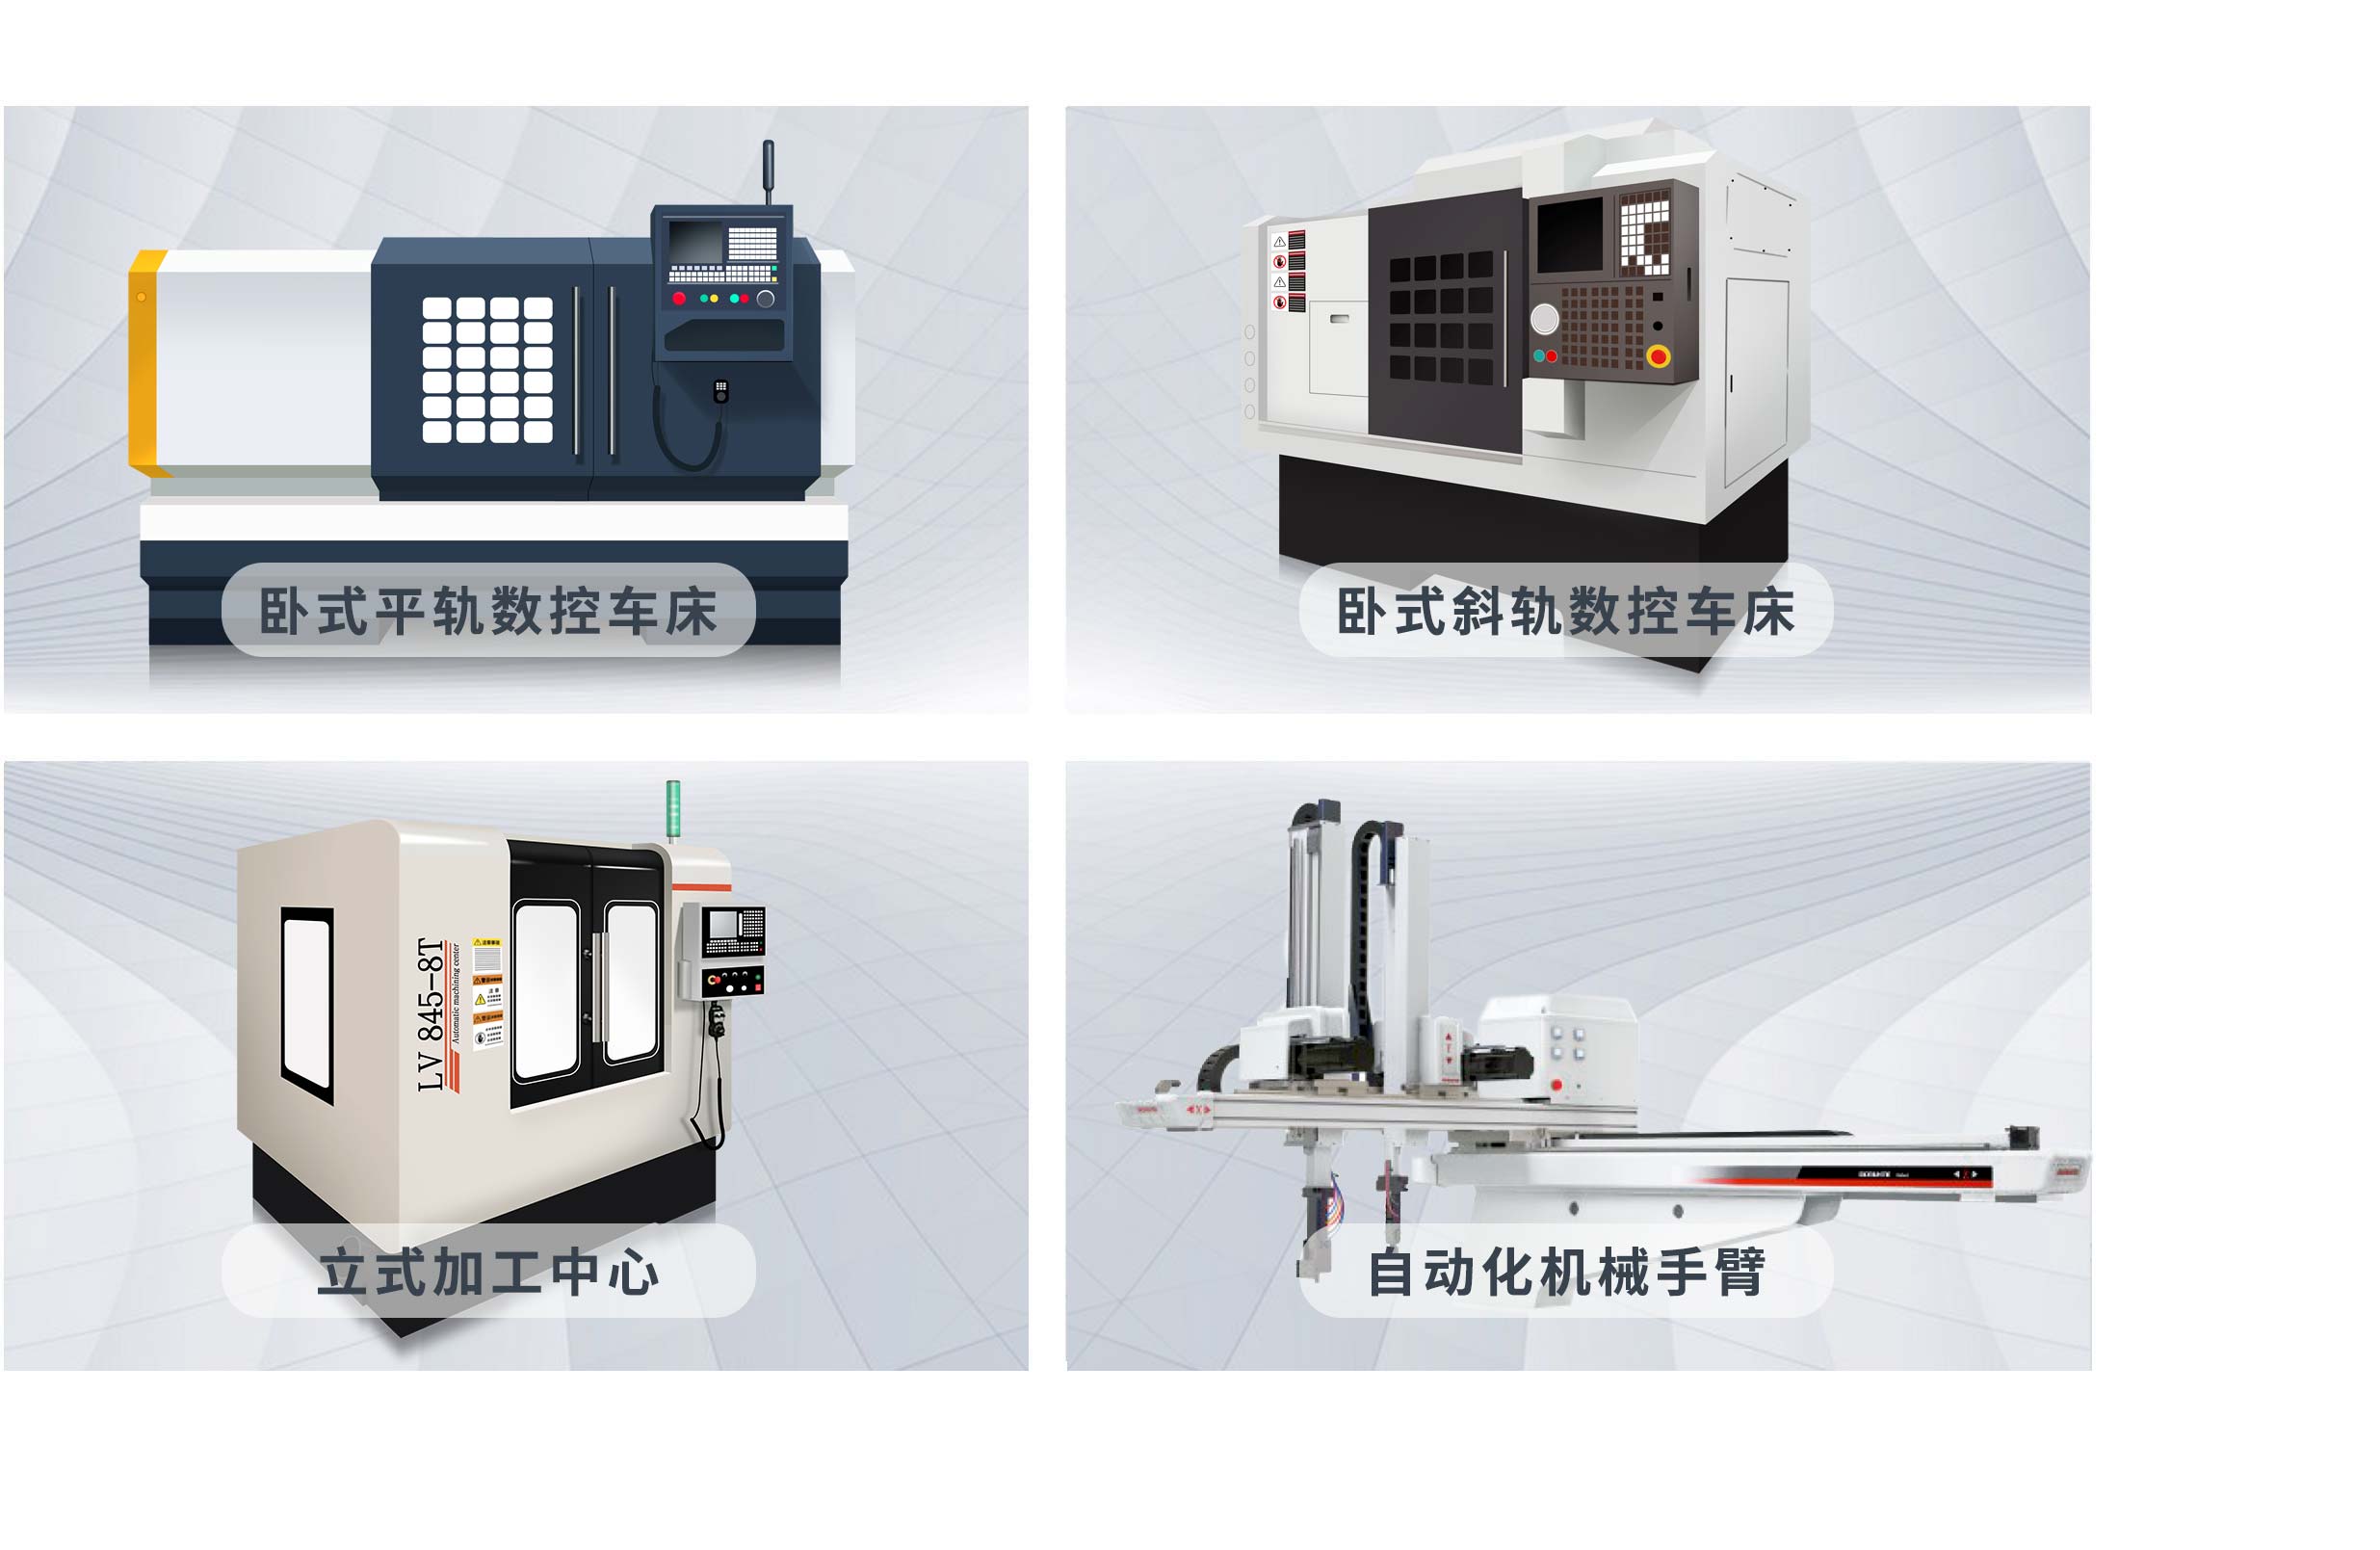 hth直播数控车床机床和CNC加工中心的产品展示图